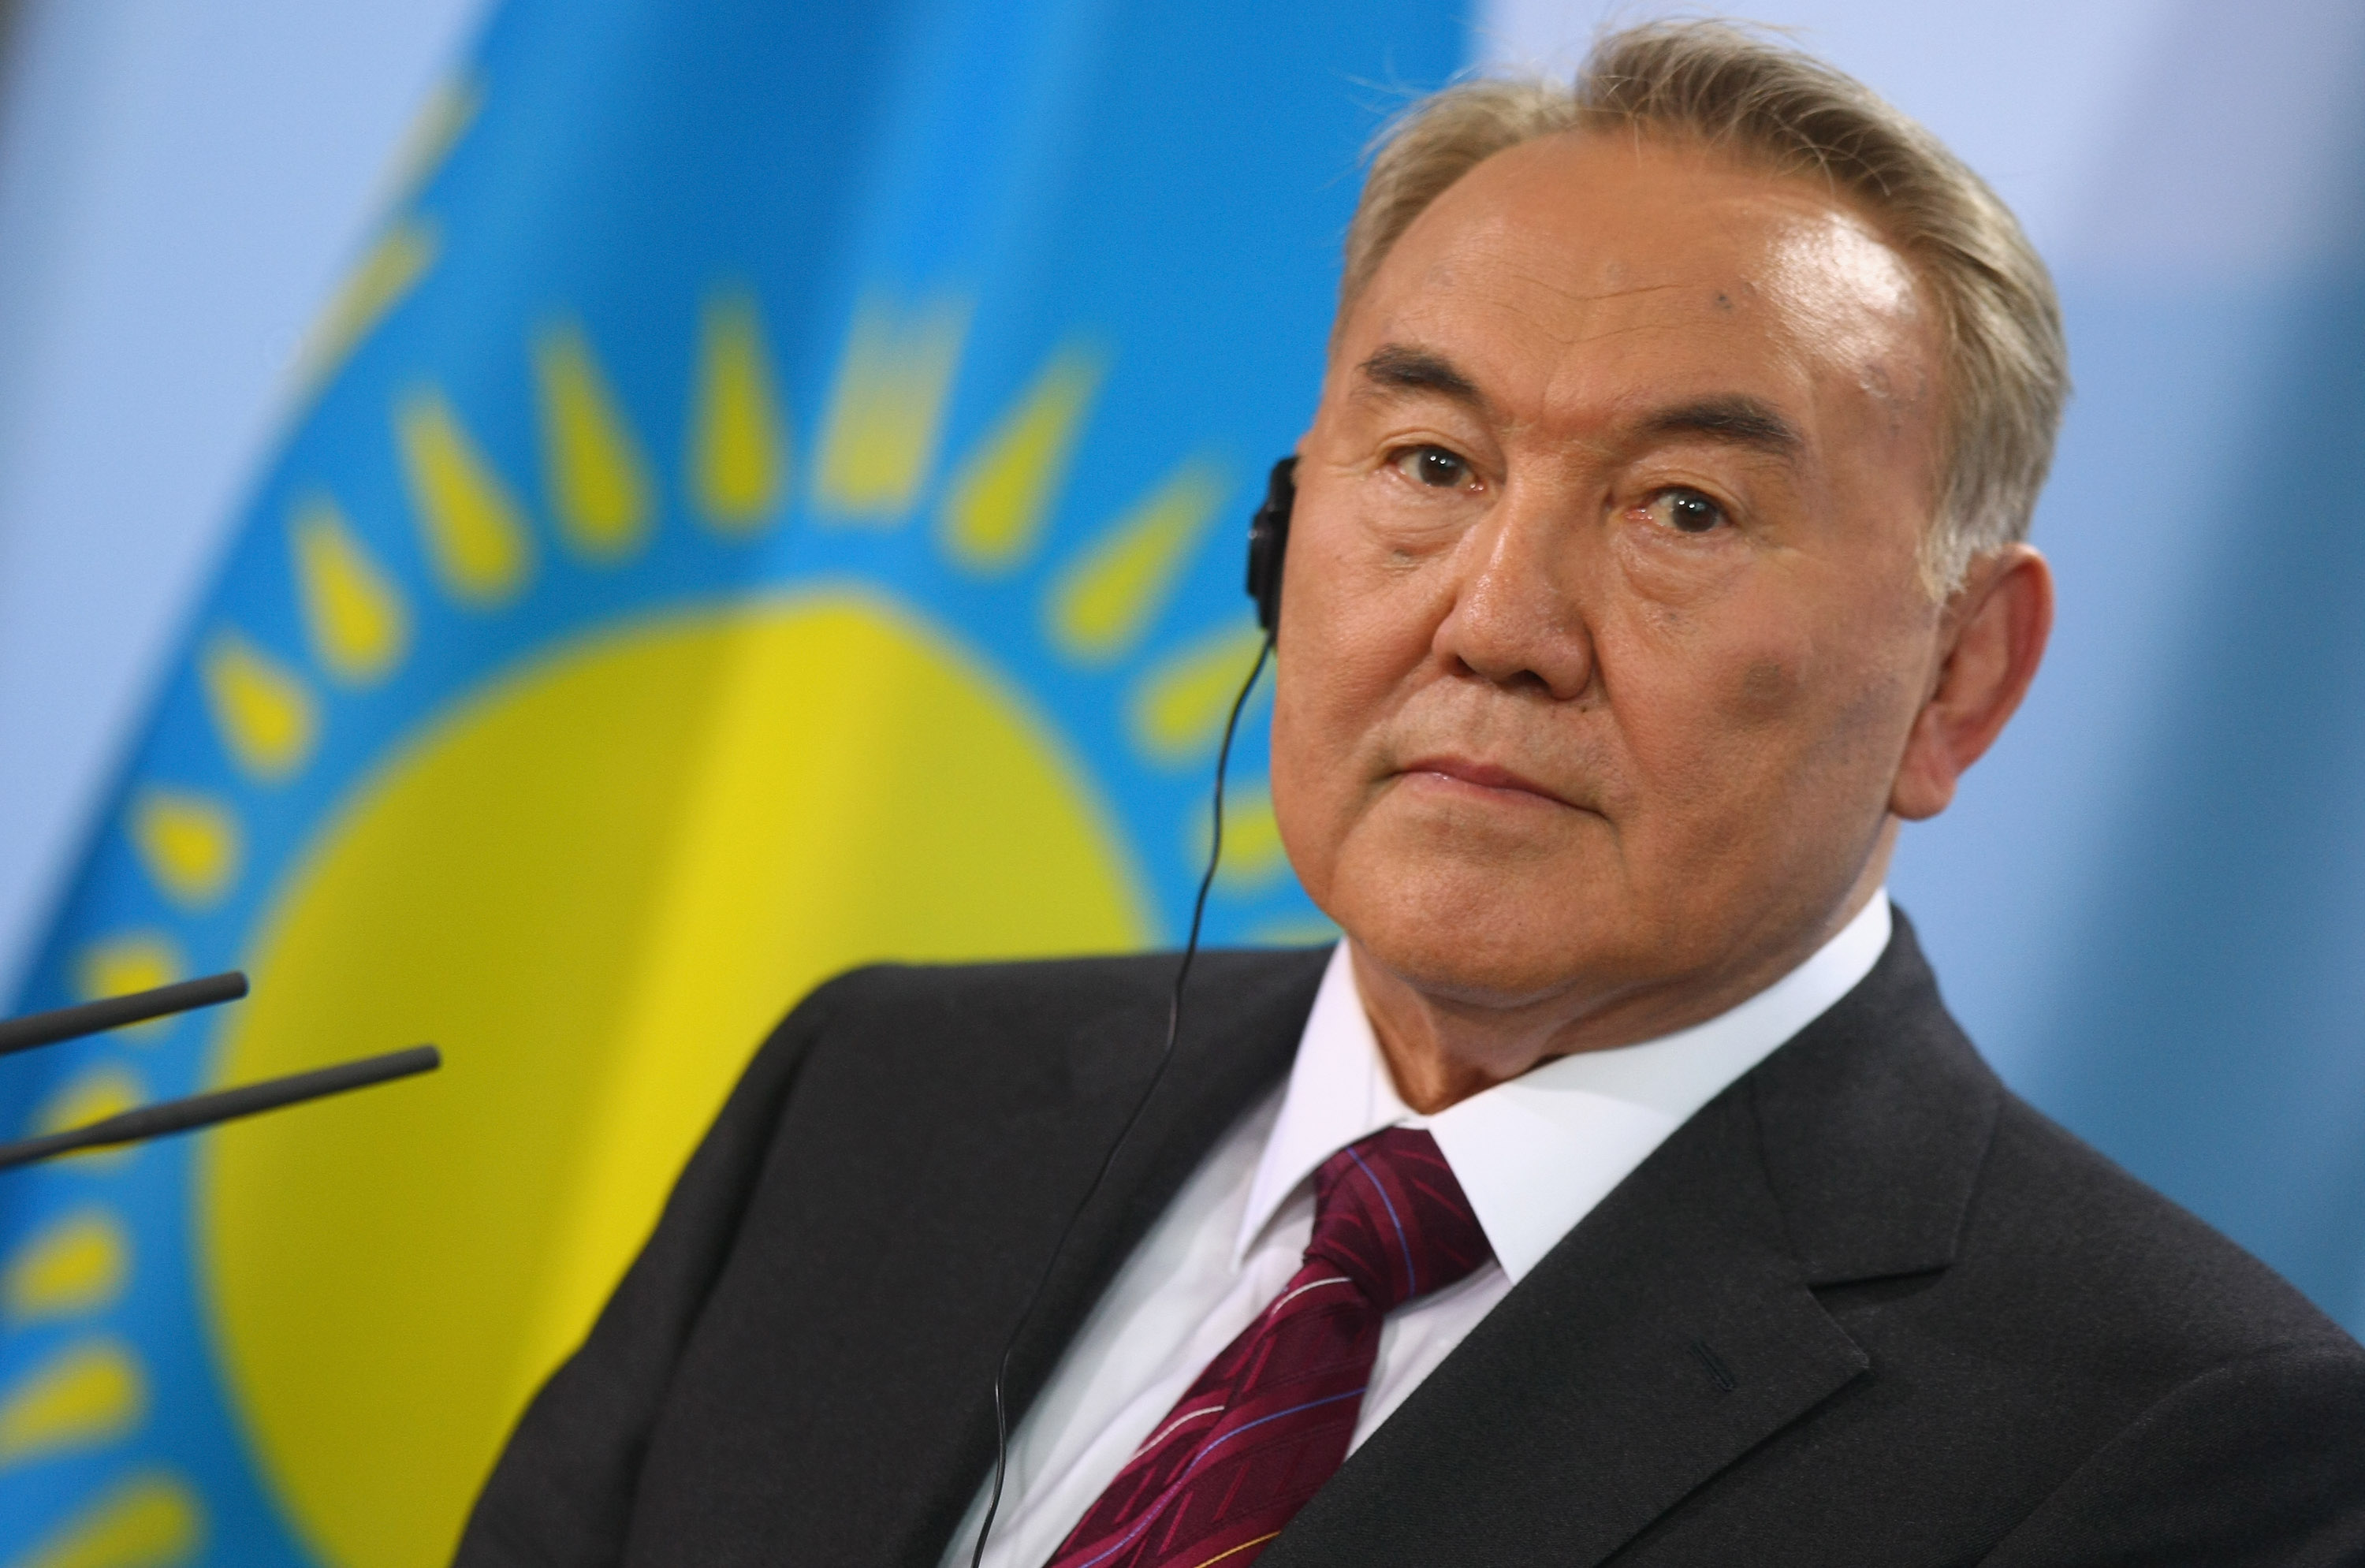 Kazakh President Nursultan Nazarbayev (Photo credit: Sean Gallup/Getty Images))